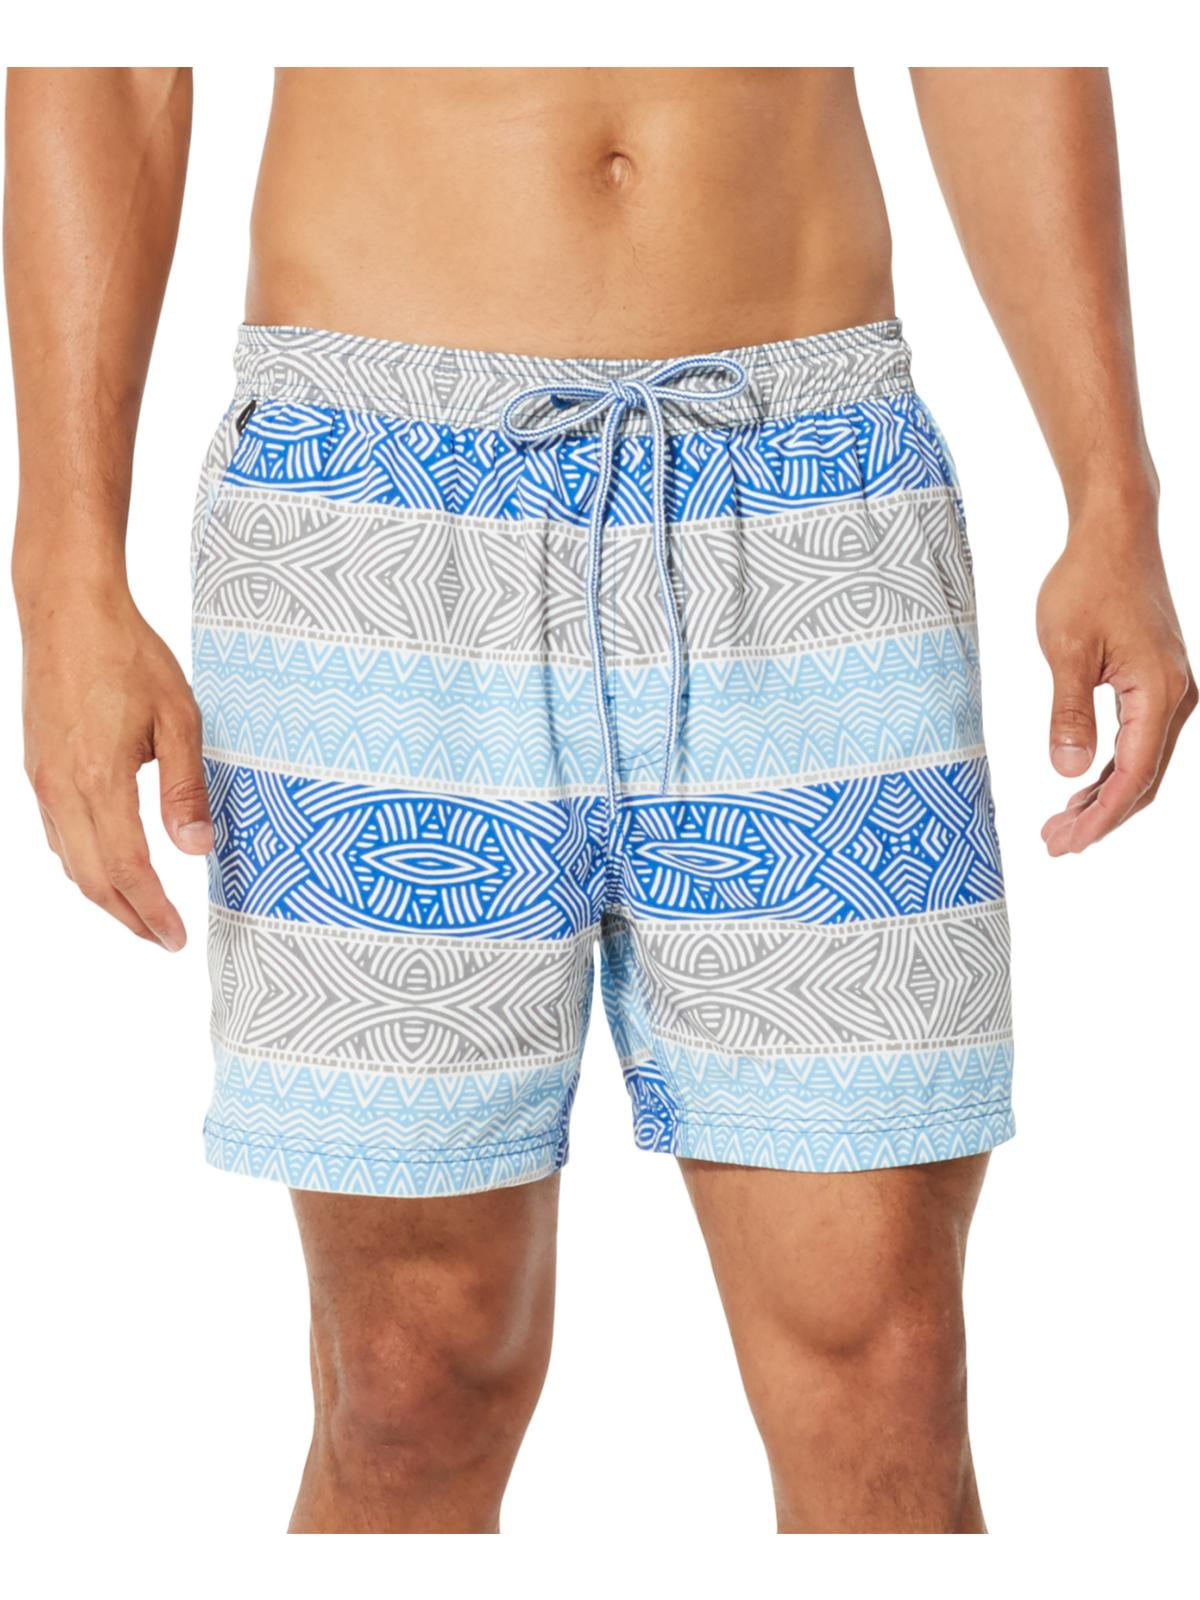 Speedo - Speedo Mens Swim Trunks Pattern Board Shorts - Walmart.com ...